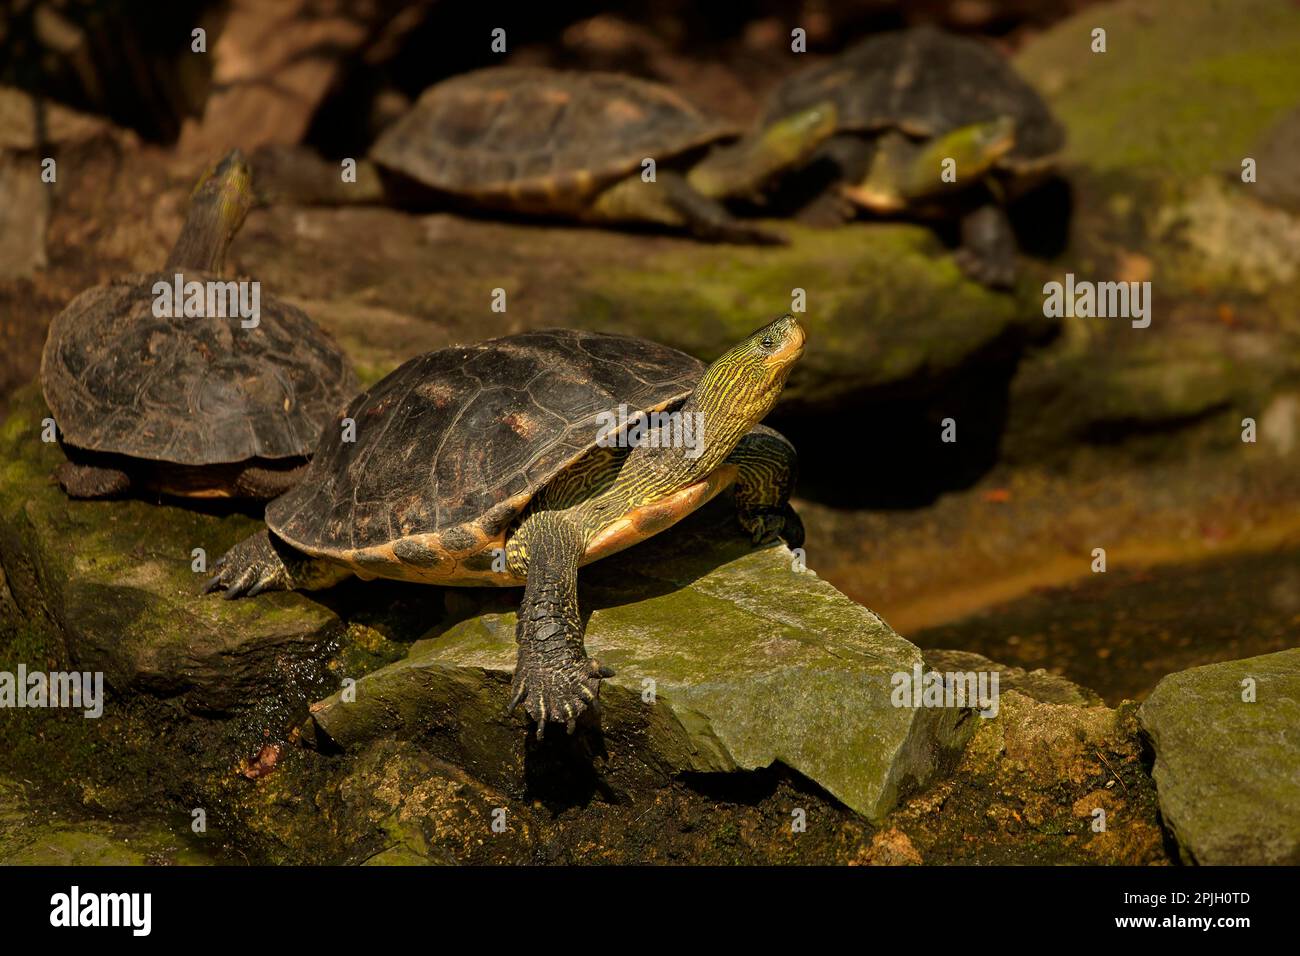 Chinese stripe-necked turtle (Ocadia sinensis), Chinese Stripe-necked Turtles, Other animals, Reptiles, Turtles, Animals, Water Turtles, Chinese Stock Photo